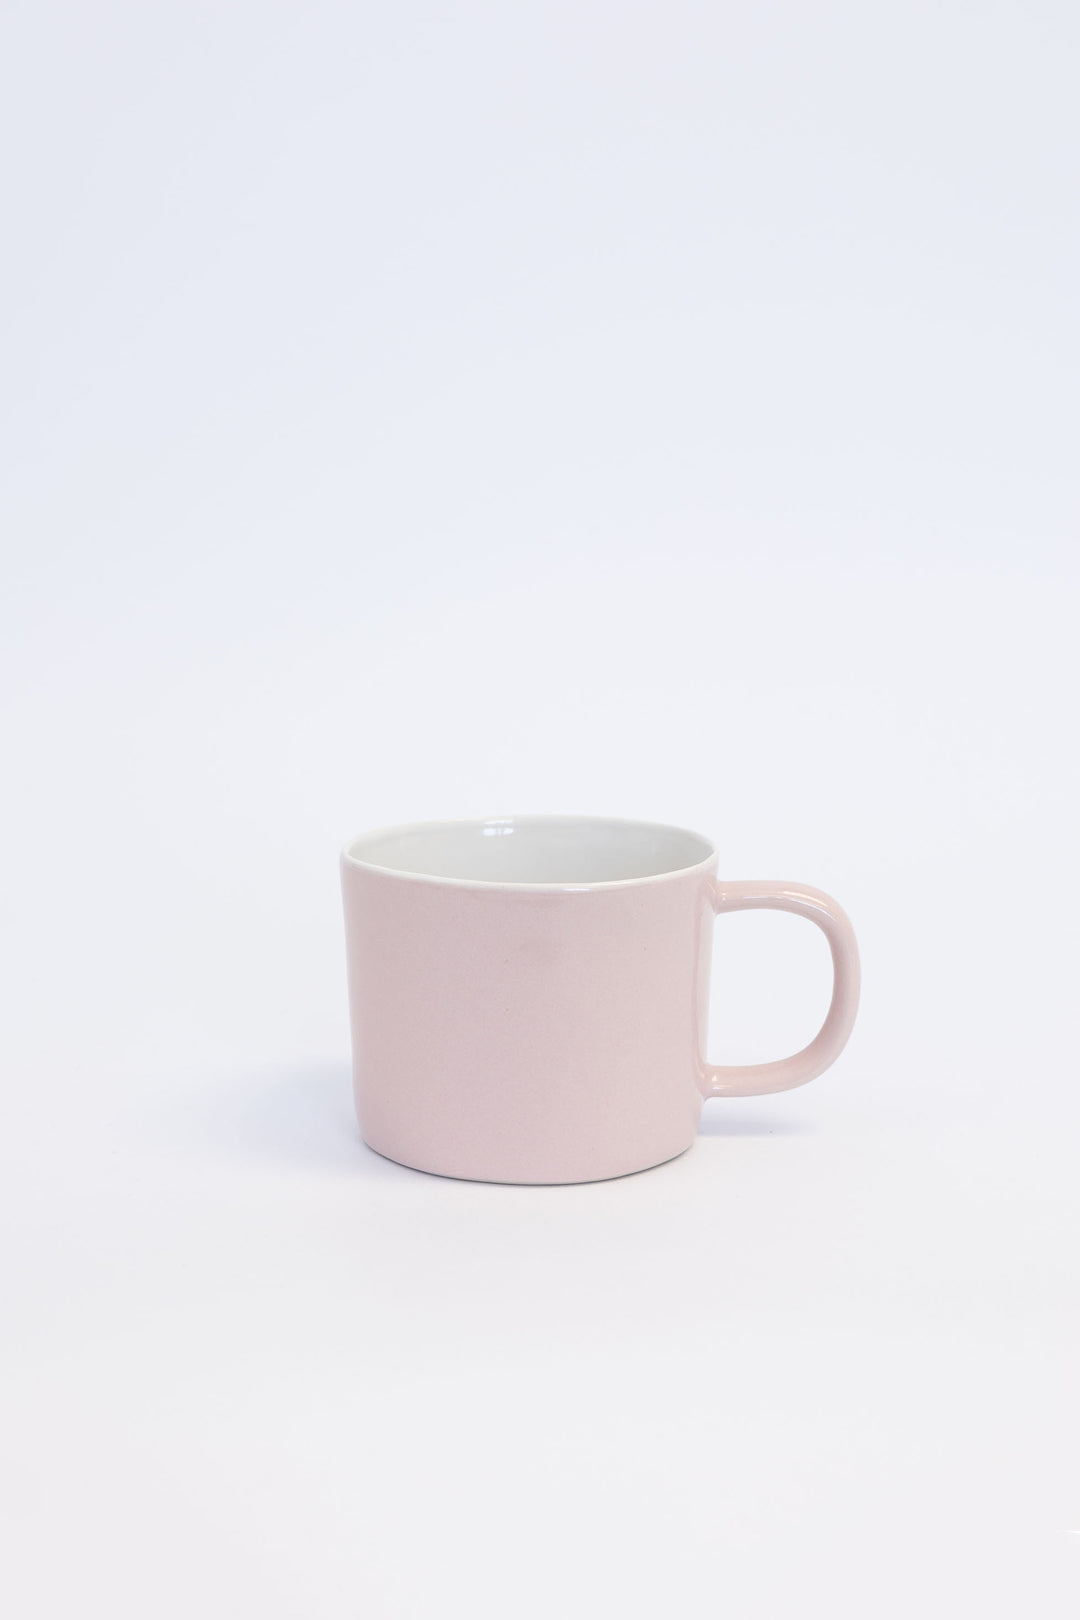 Quail's Egg Ceramics Colourful Mug - Domestic Science Home